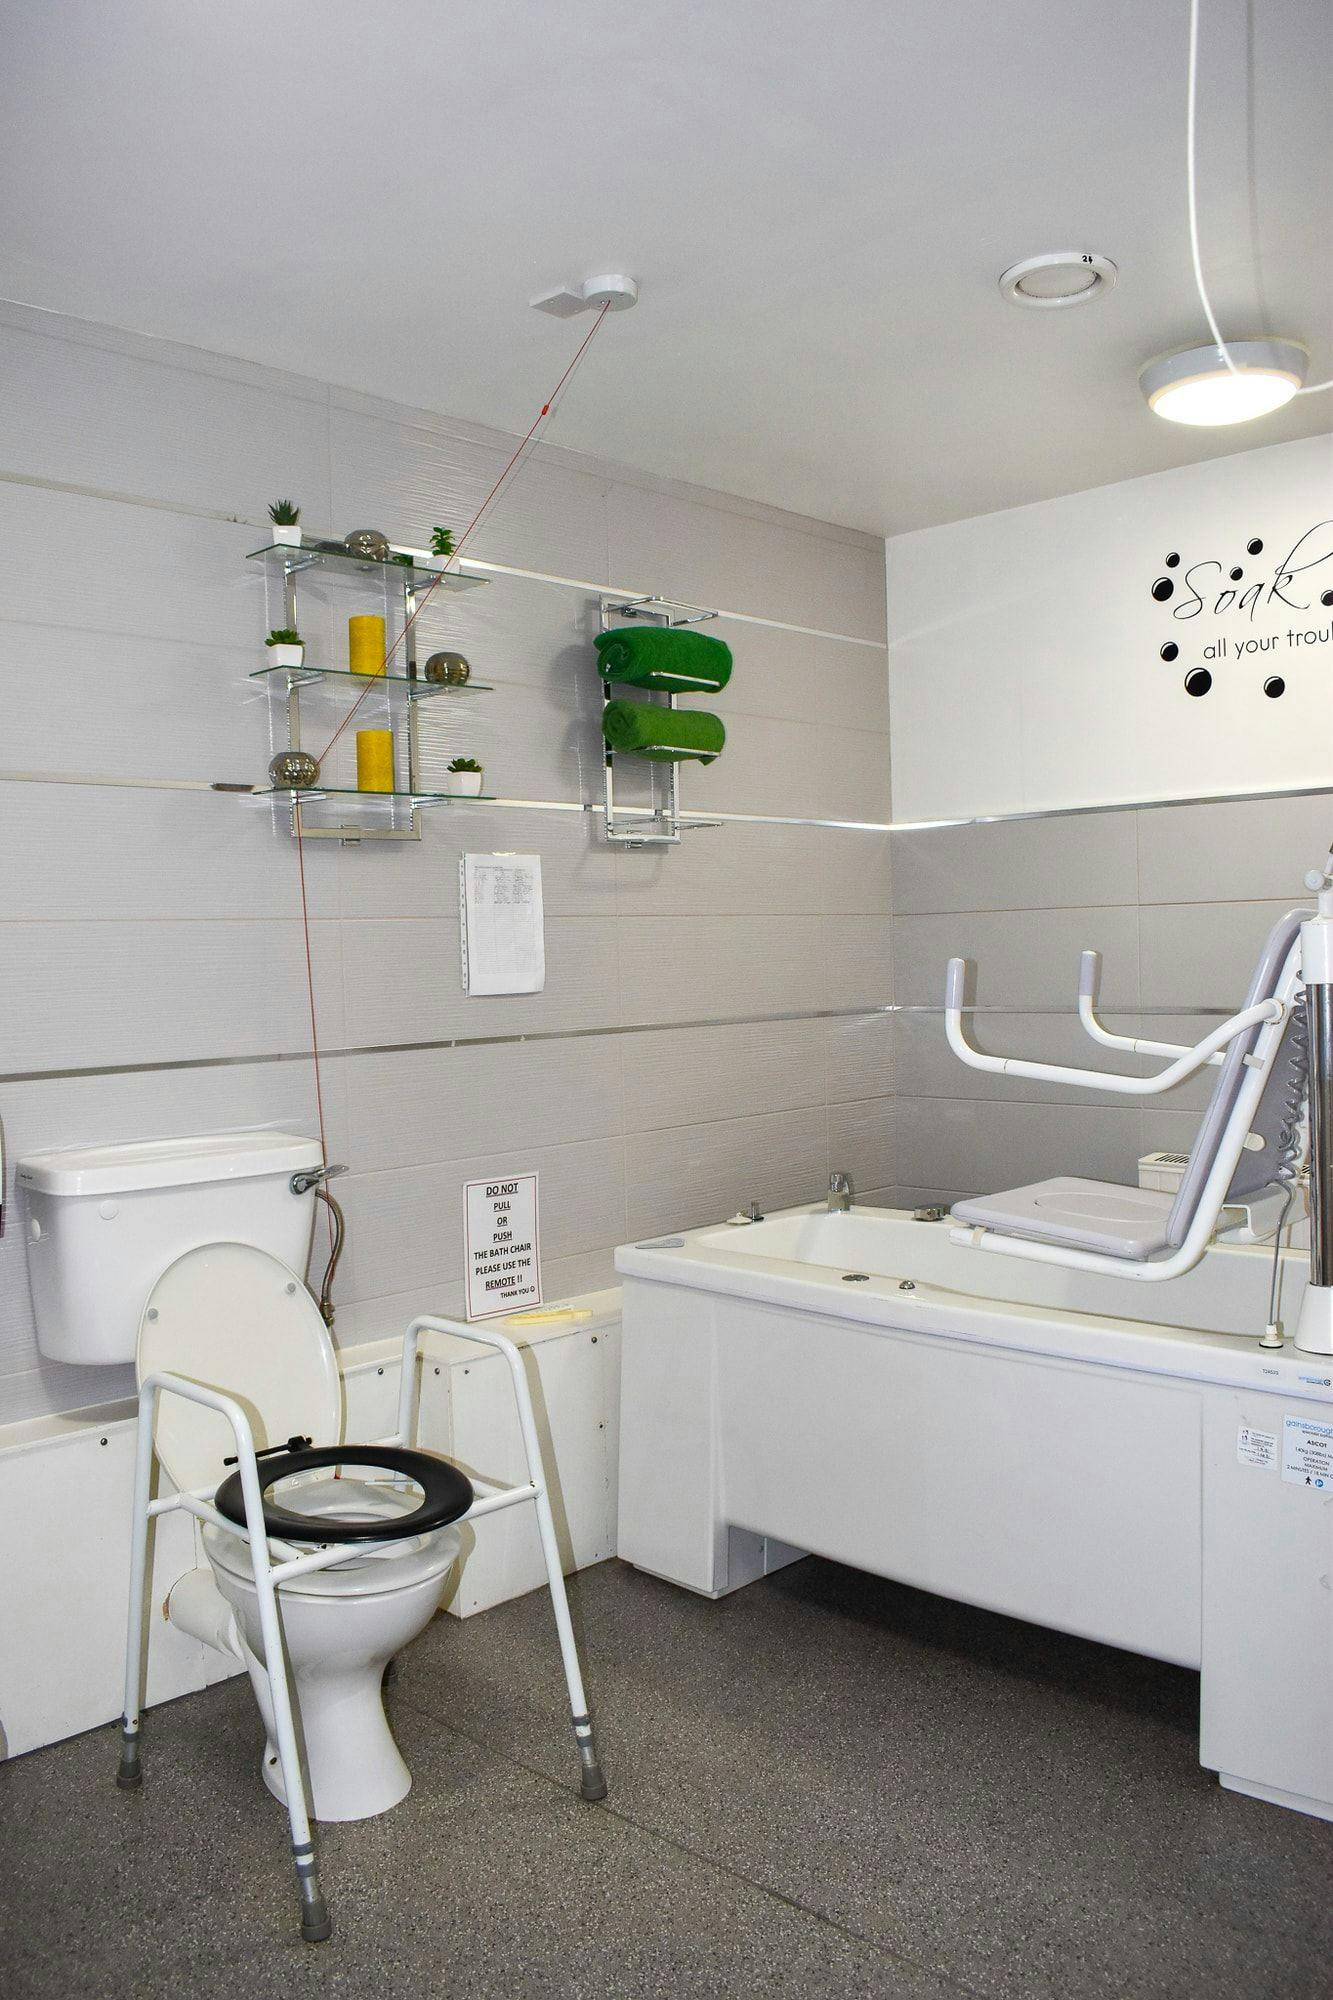 Bathroom at Mahogany Care Home, Newtown, Wigan, Lancashire